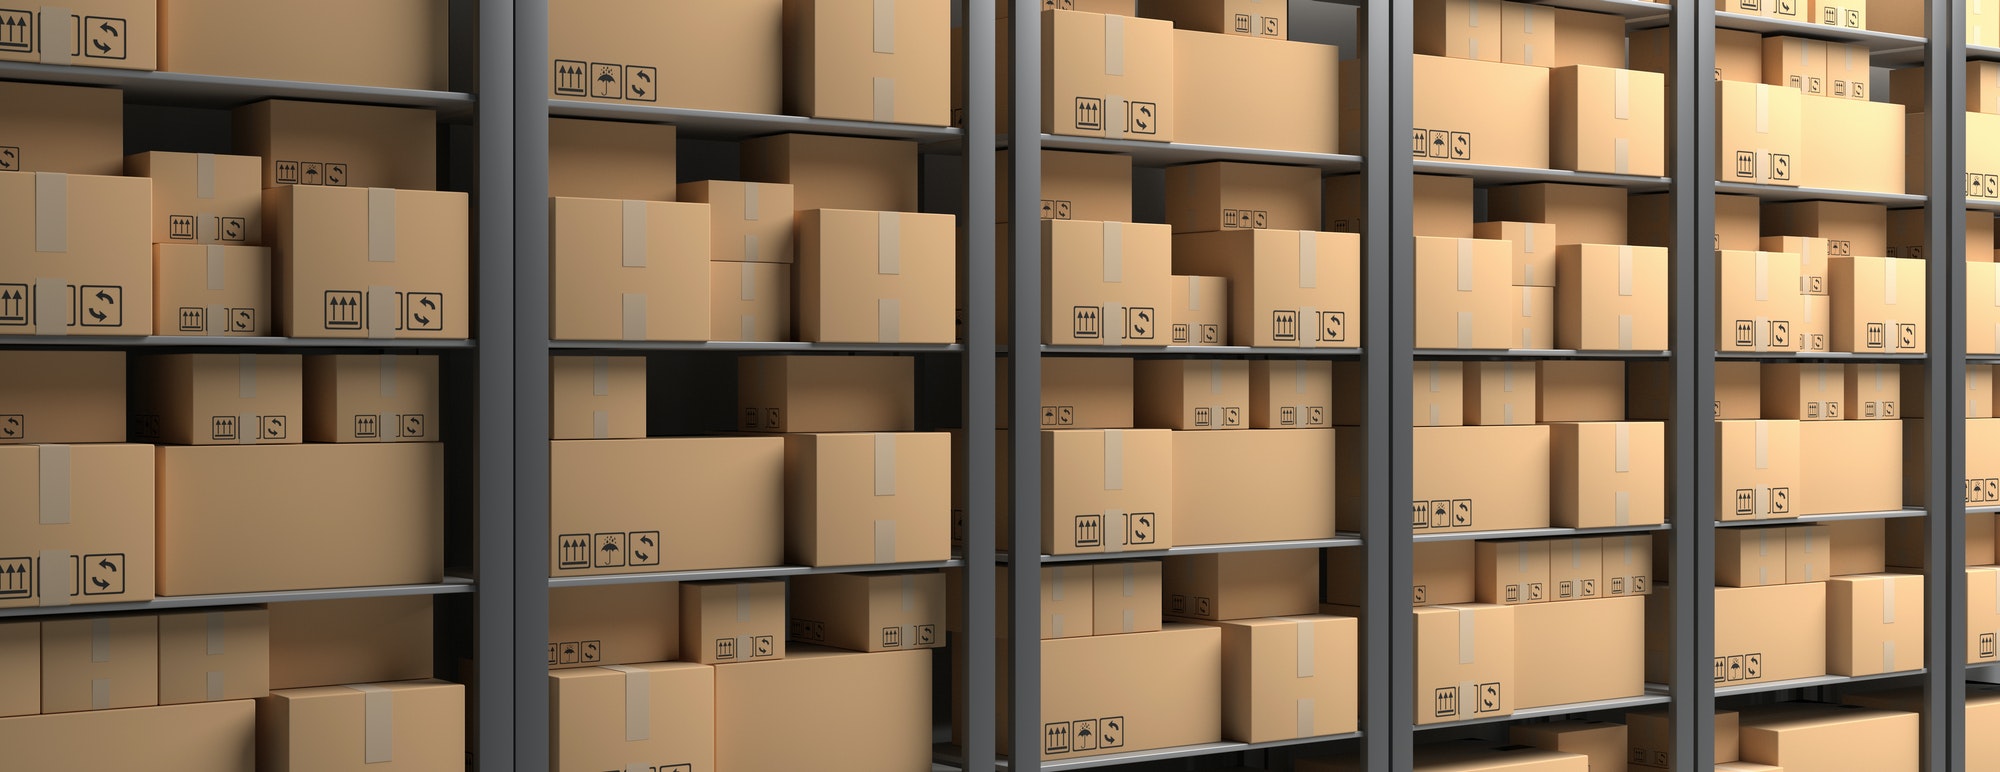 cardboard boxes on storage warehouse shelves background 3d illustration - Stockage